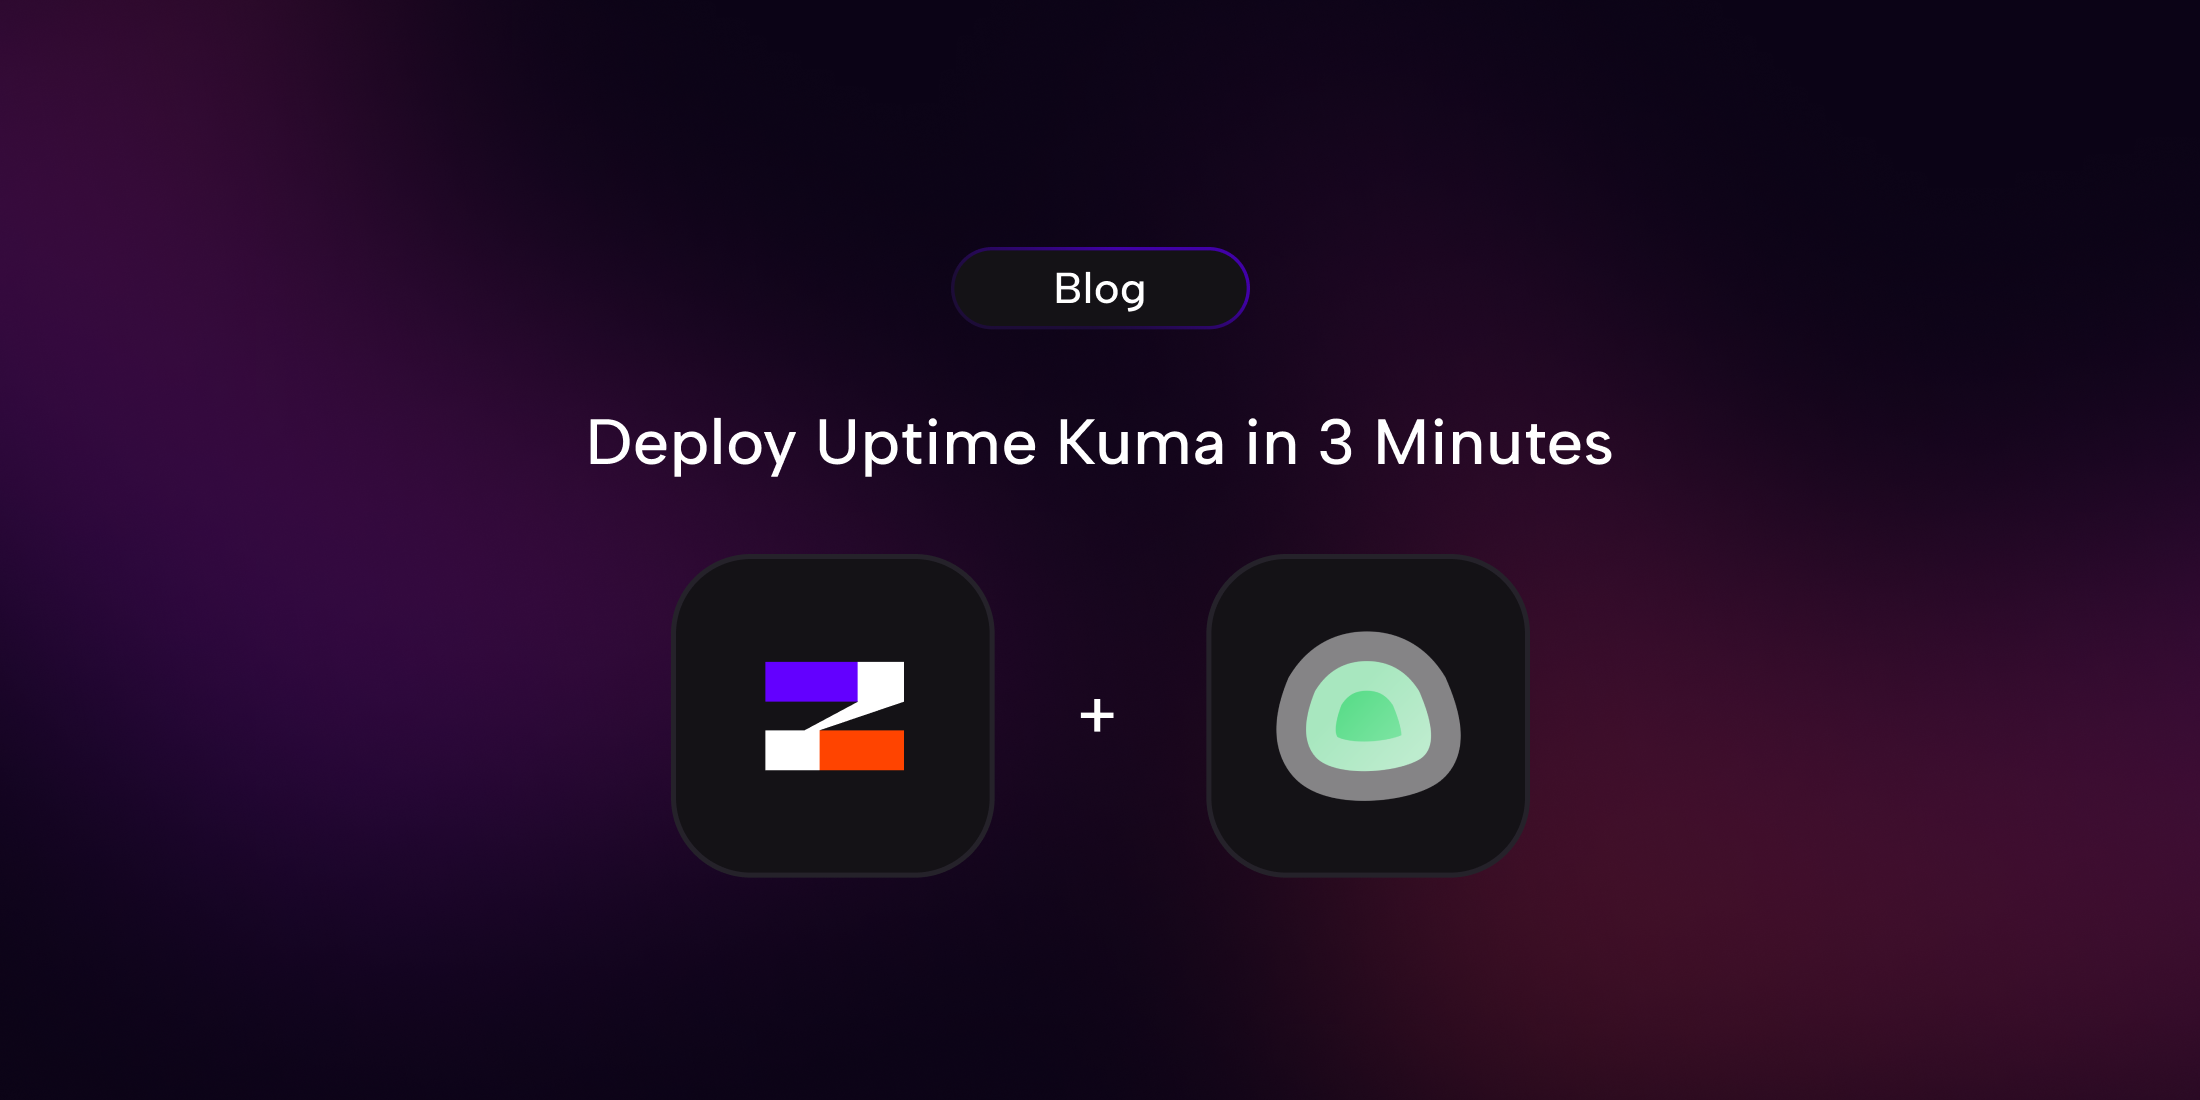 Deploy Uptime Kuma in 3 Minutes